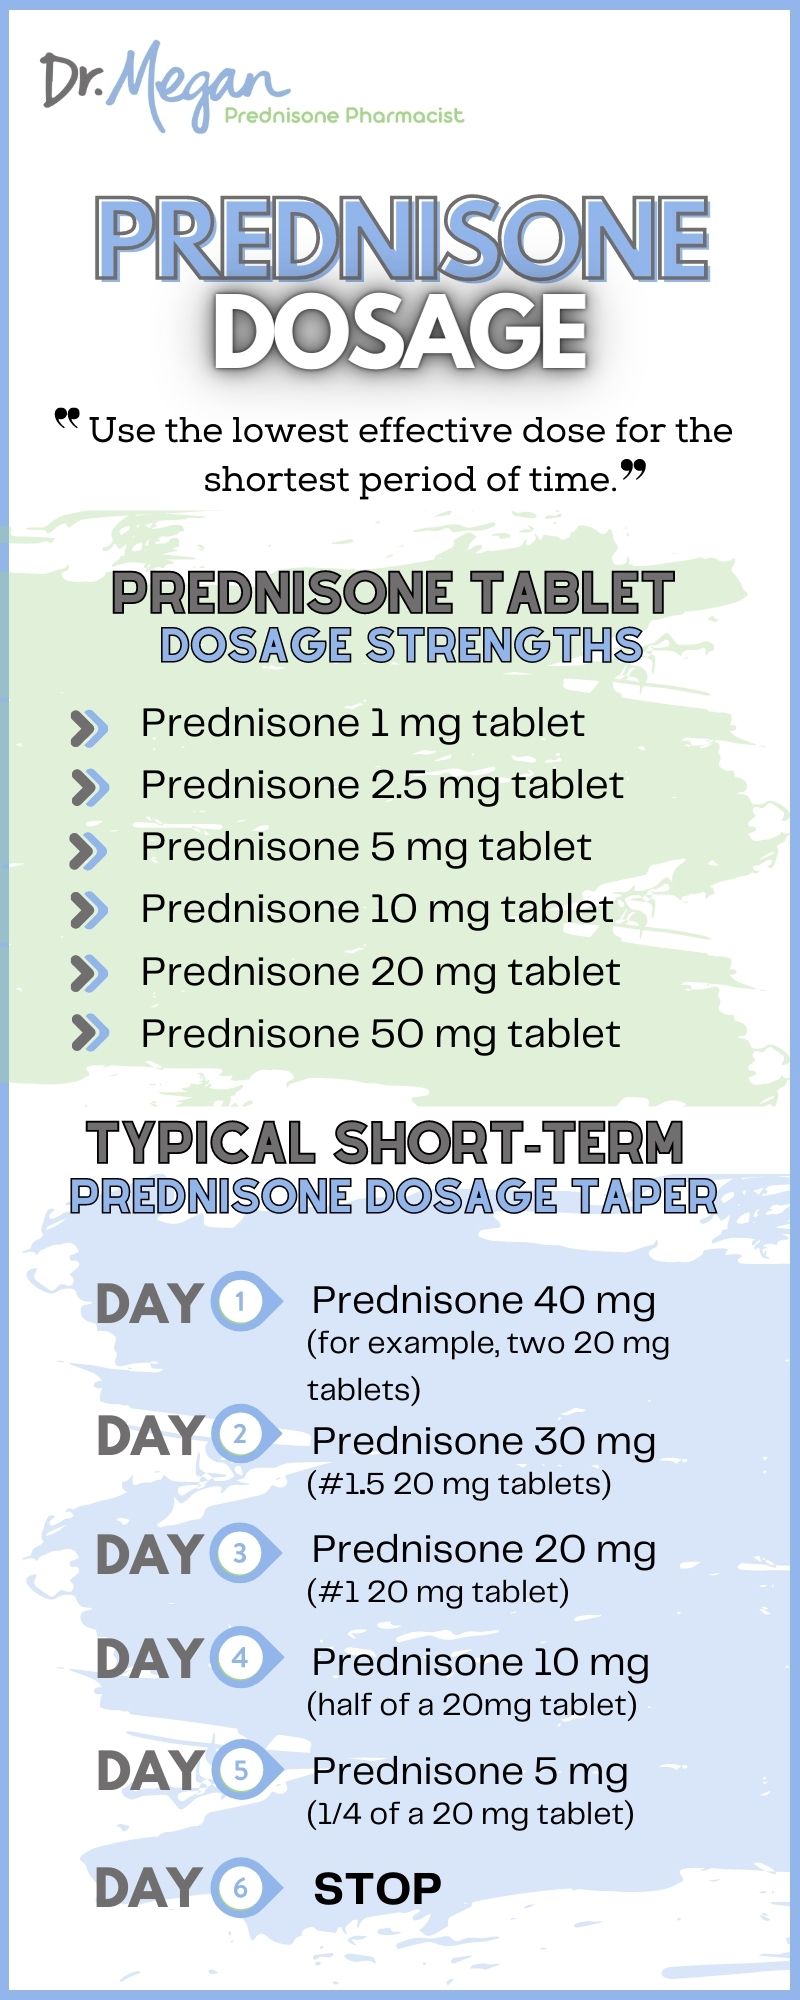 Prednisone Dosage What's Normal Prednisone Dose? Dr. Megan